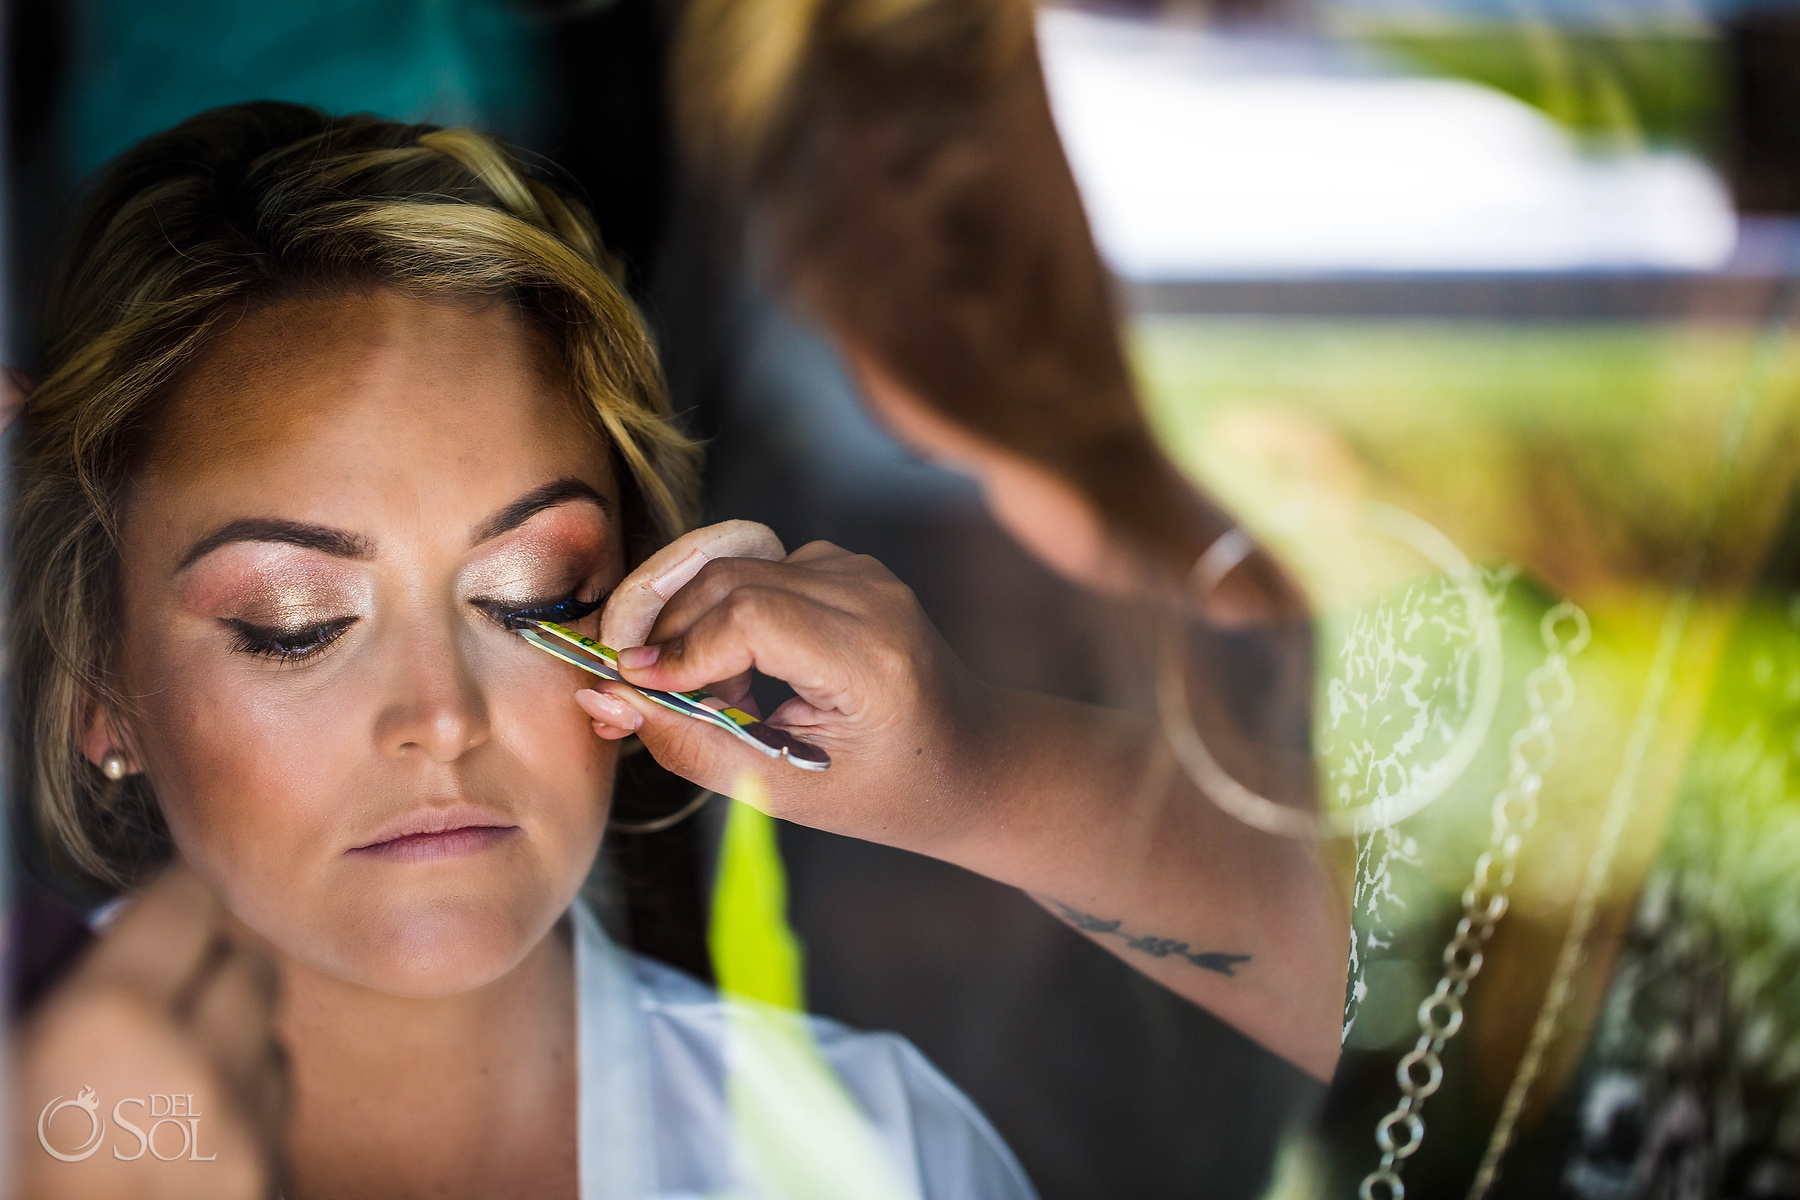 Getting Ready Bridal Makeup with false eyelashes RIU PALACE Mexico wedding Photographer